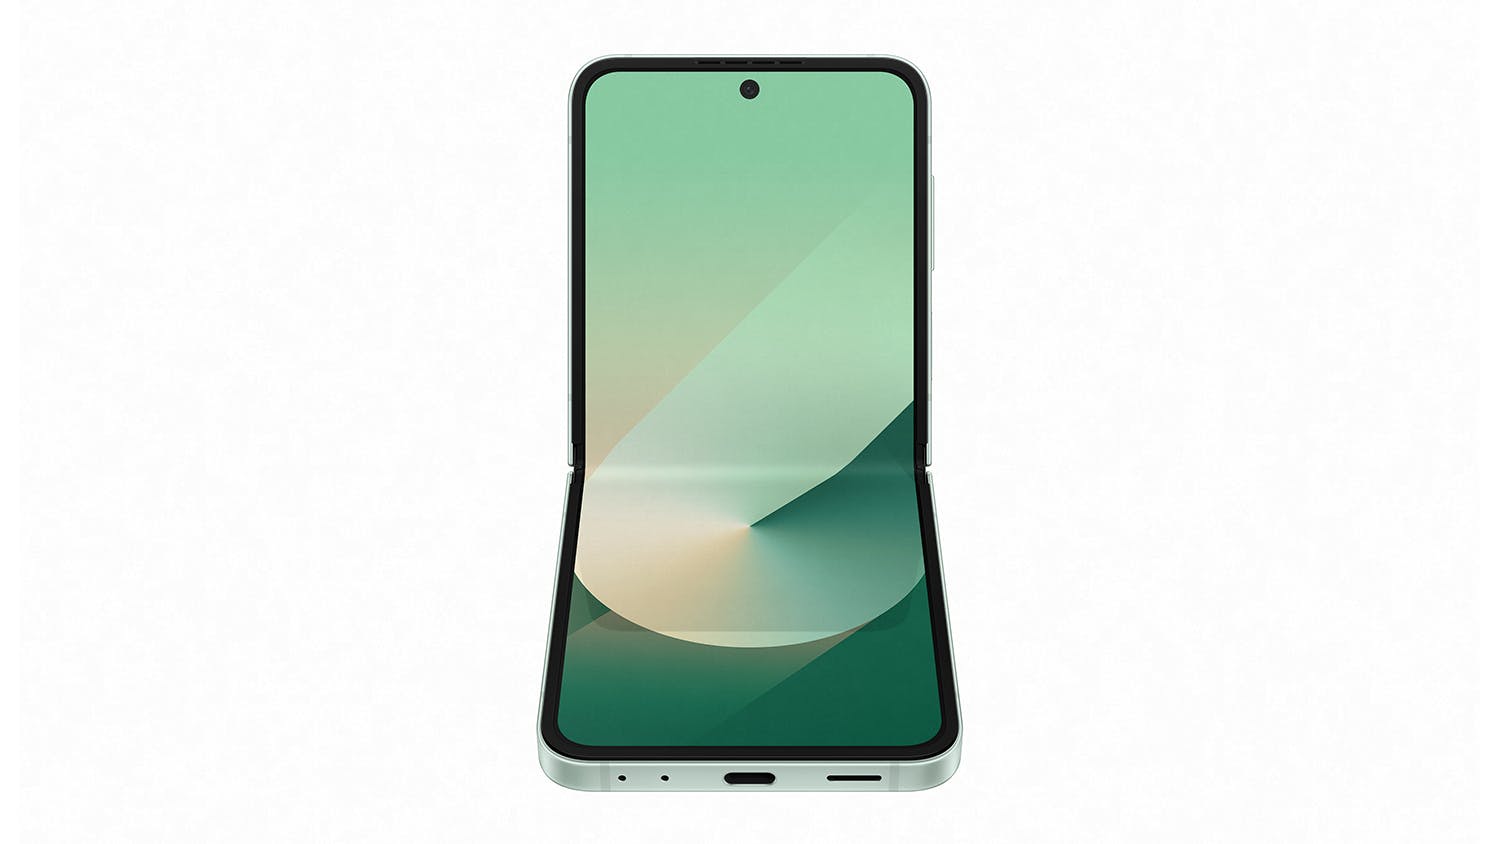 Samsung Galaxy Z Flip6 5G 512GB Smartphone - Mint (One NZ/Open Network)